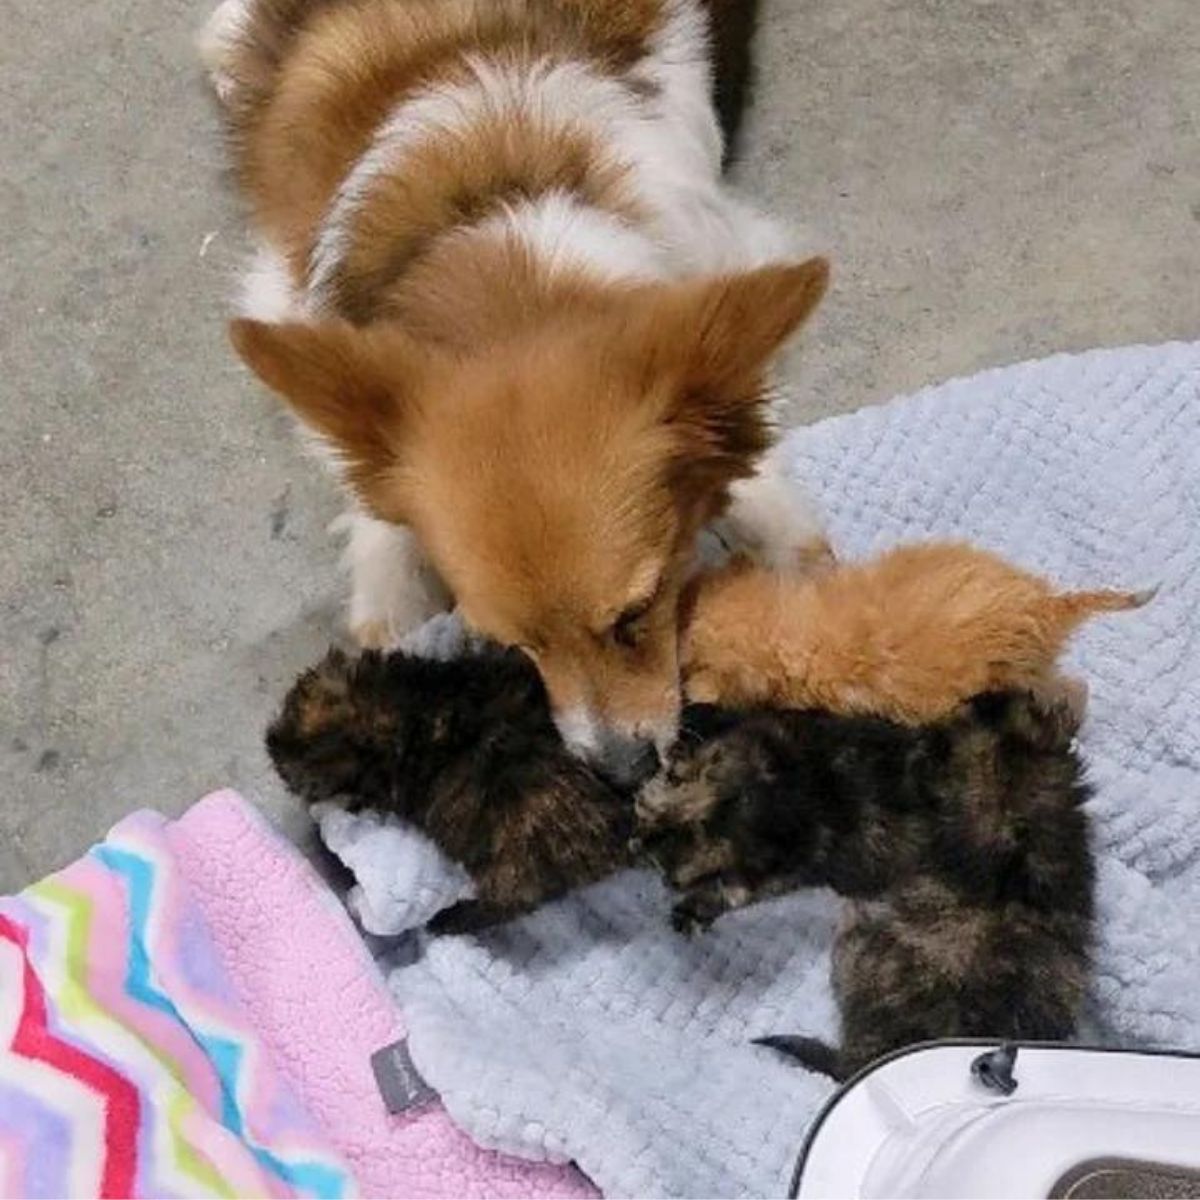 dog licking kittens